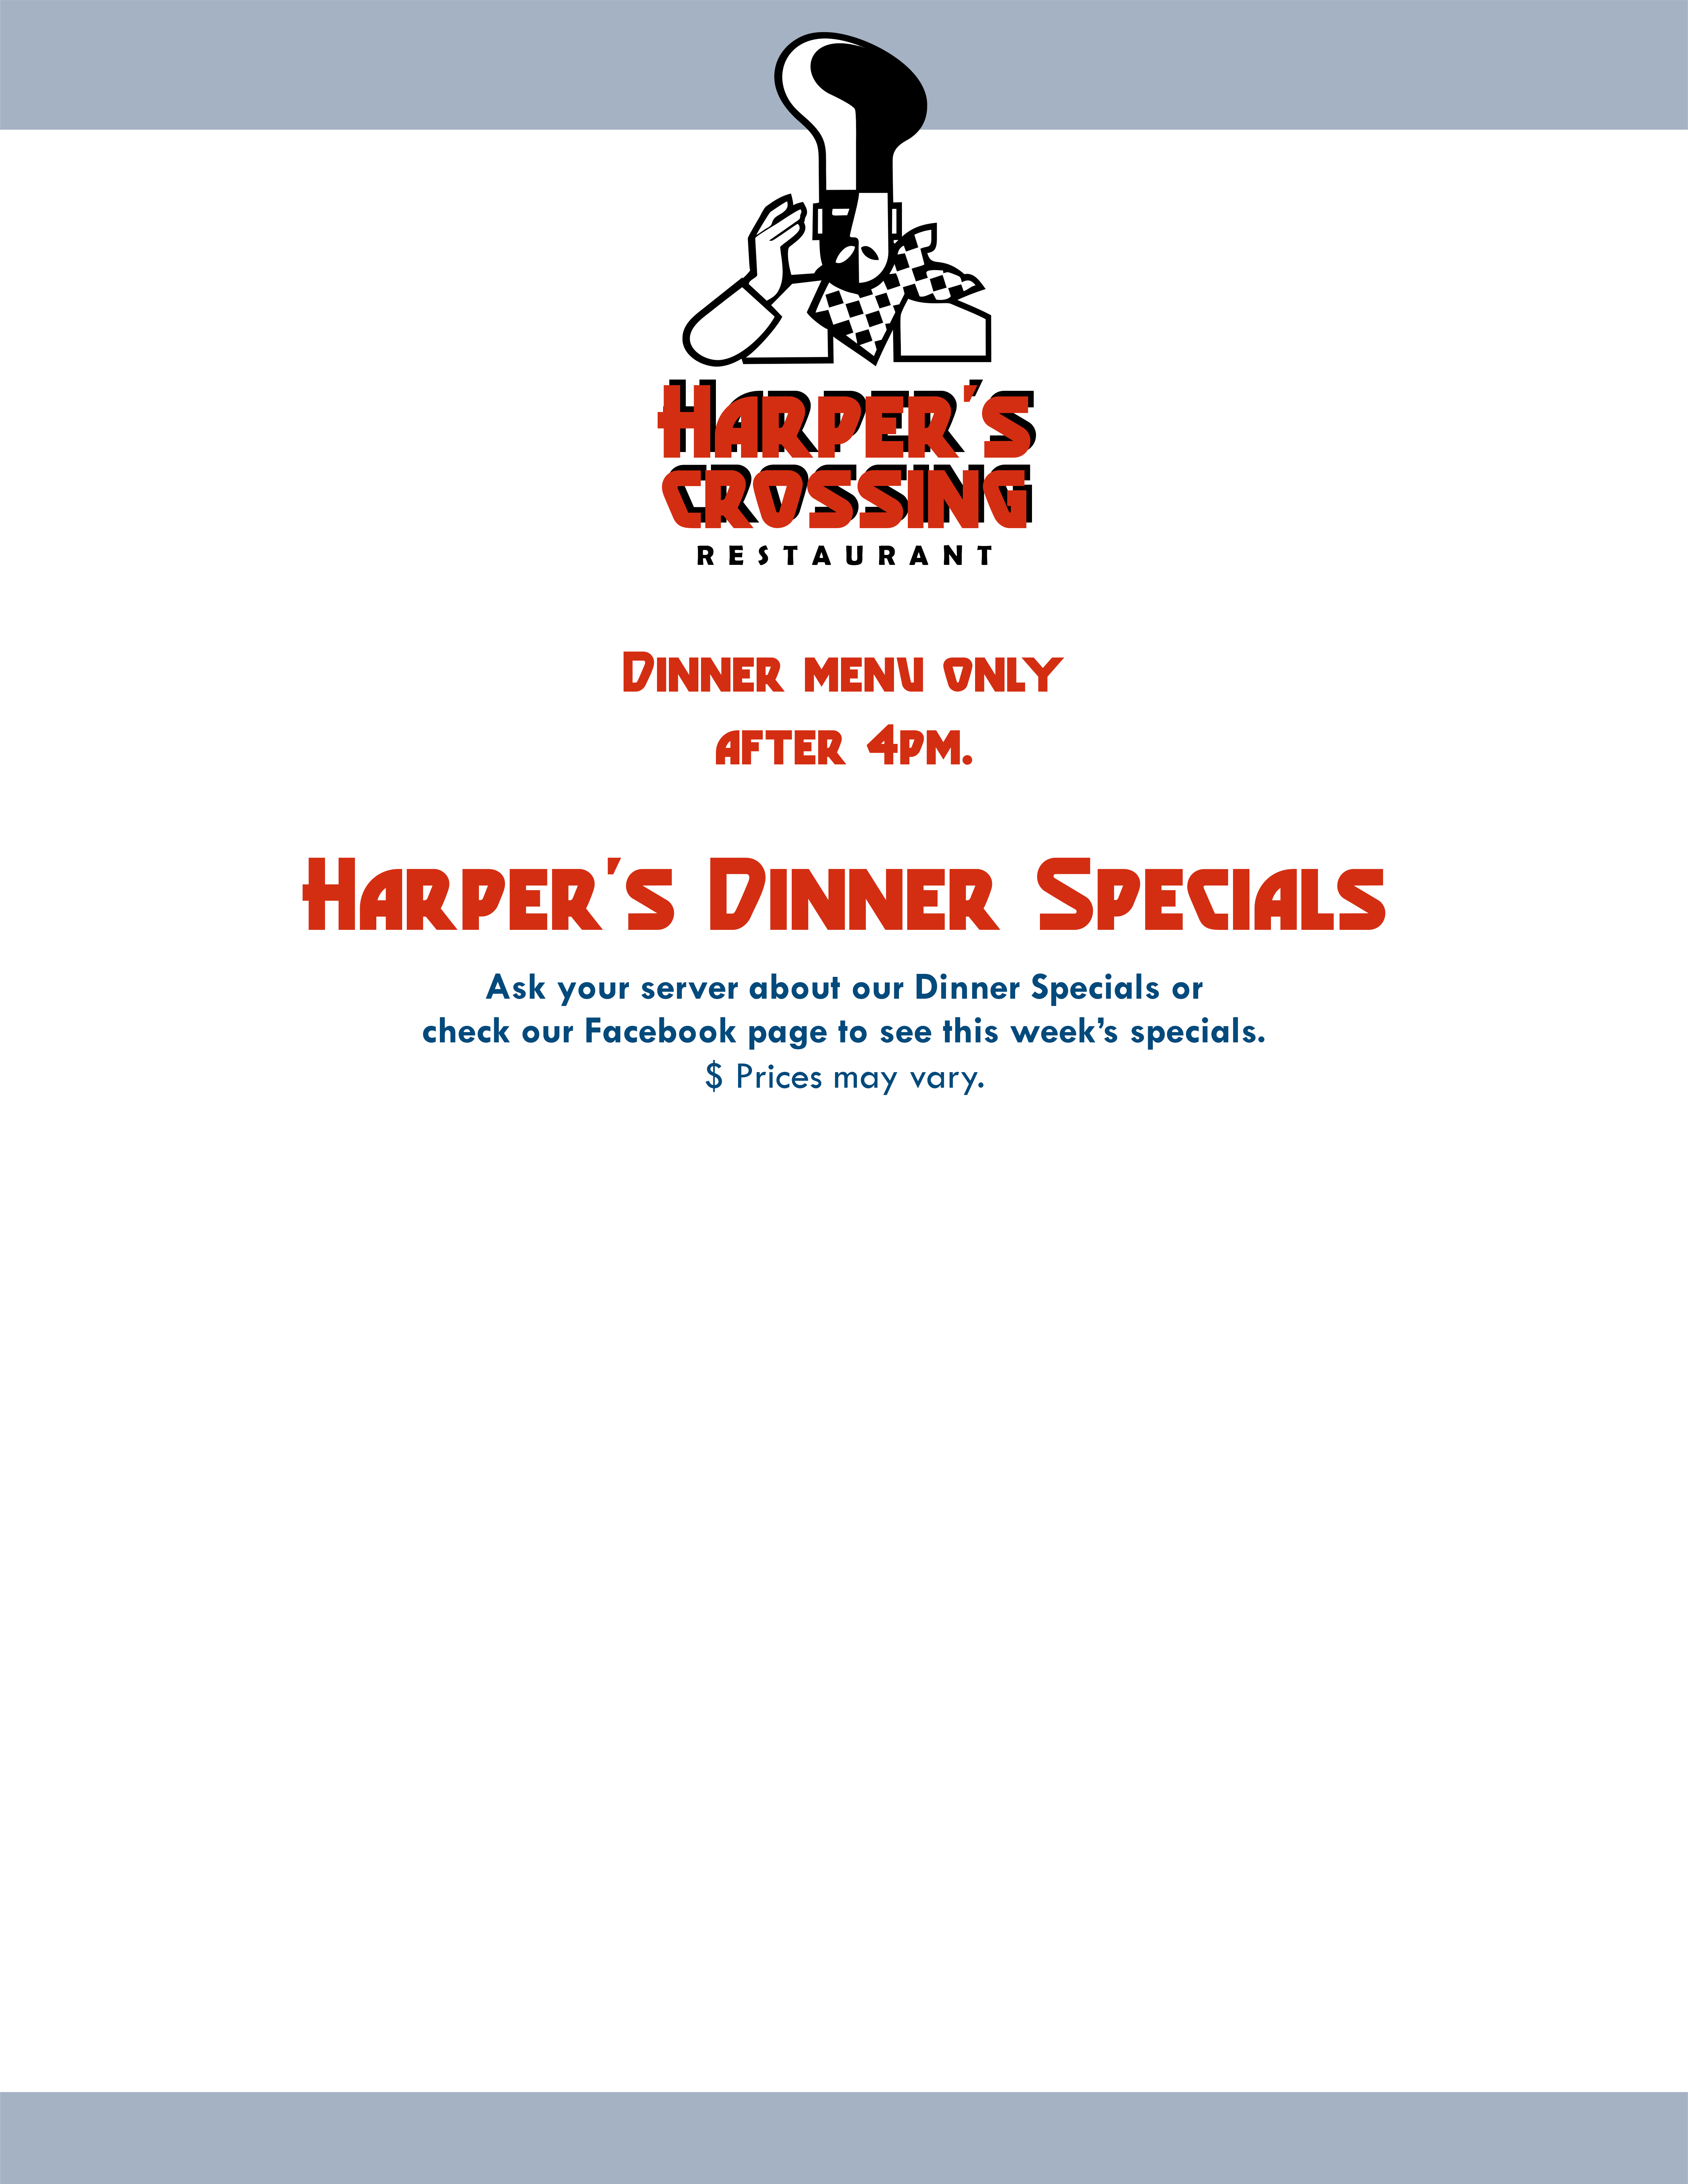 Harper's Crossing Restaurant 9981 Siler City Glendon Rd, Bear Creek, NC 27207